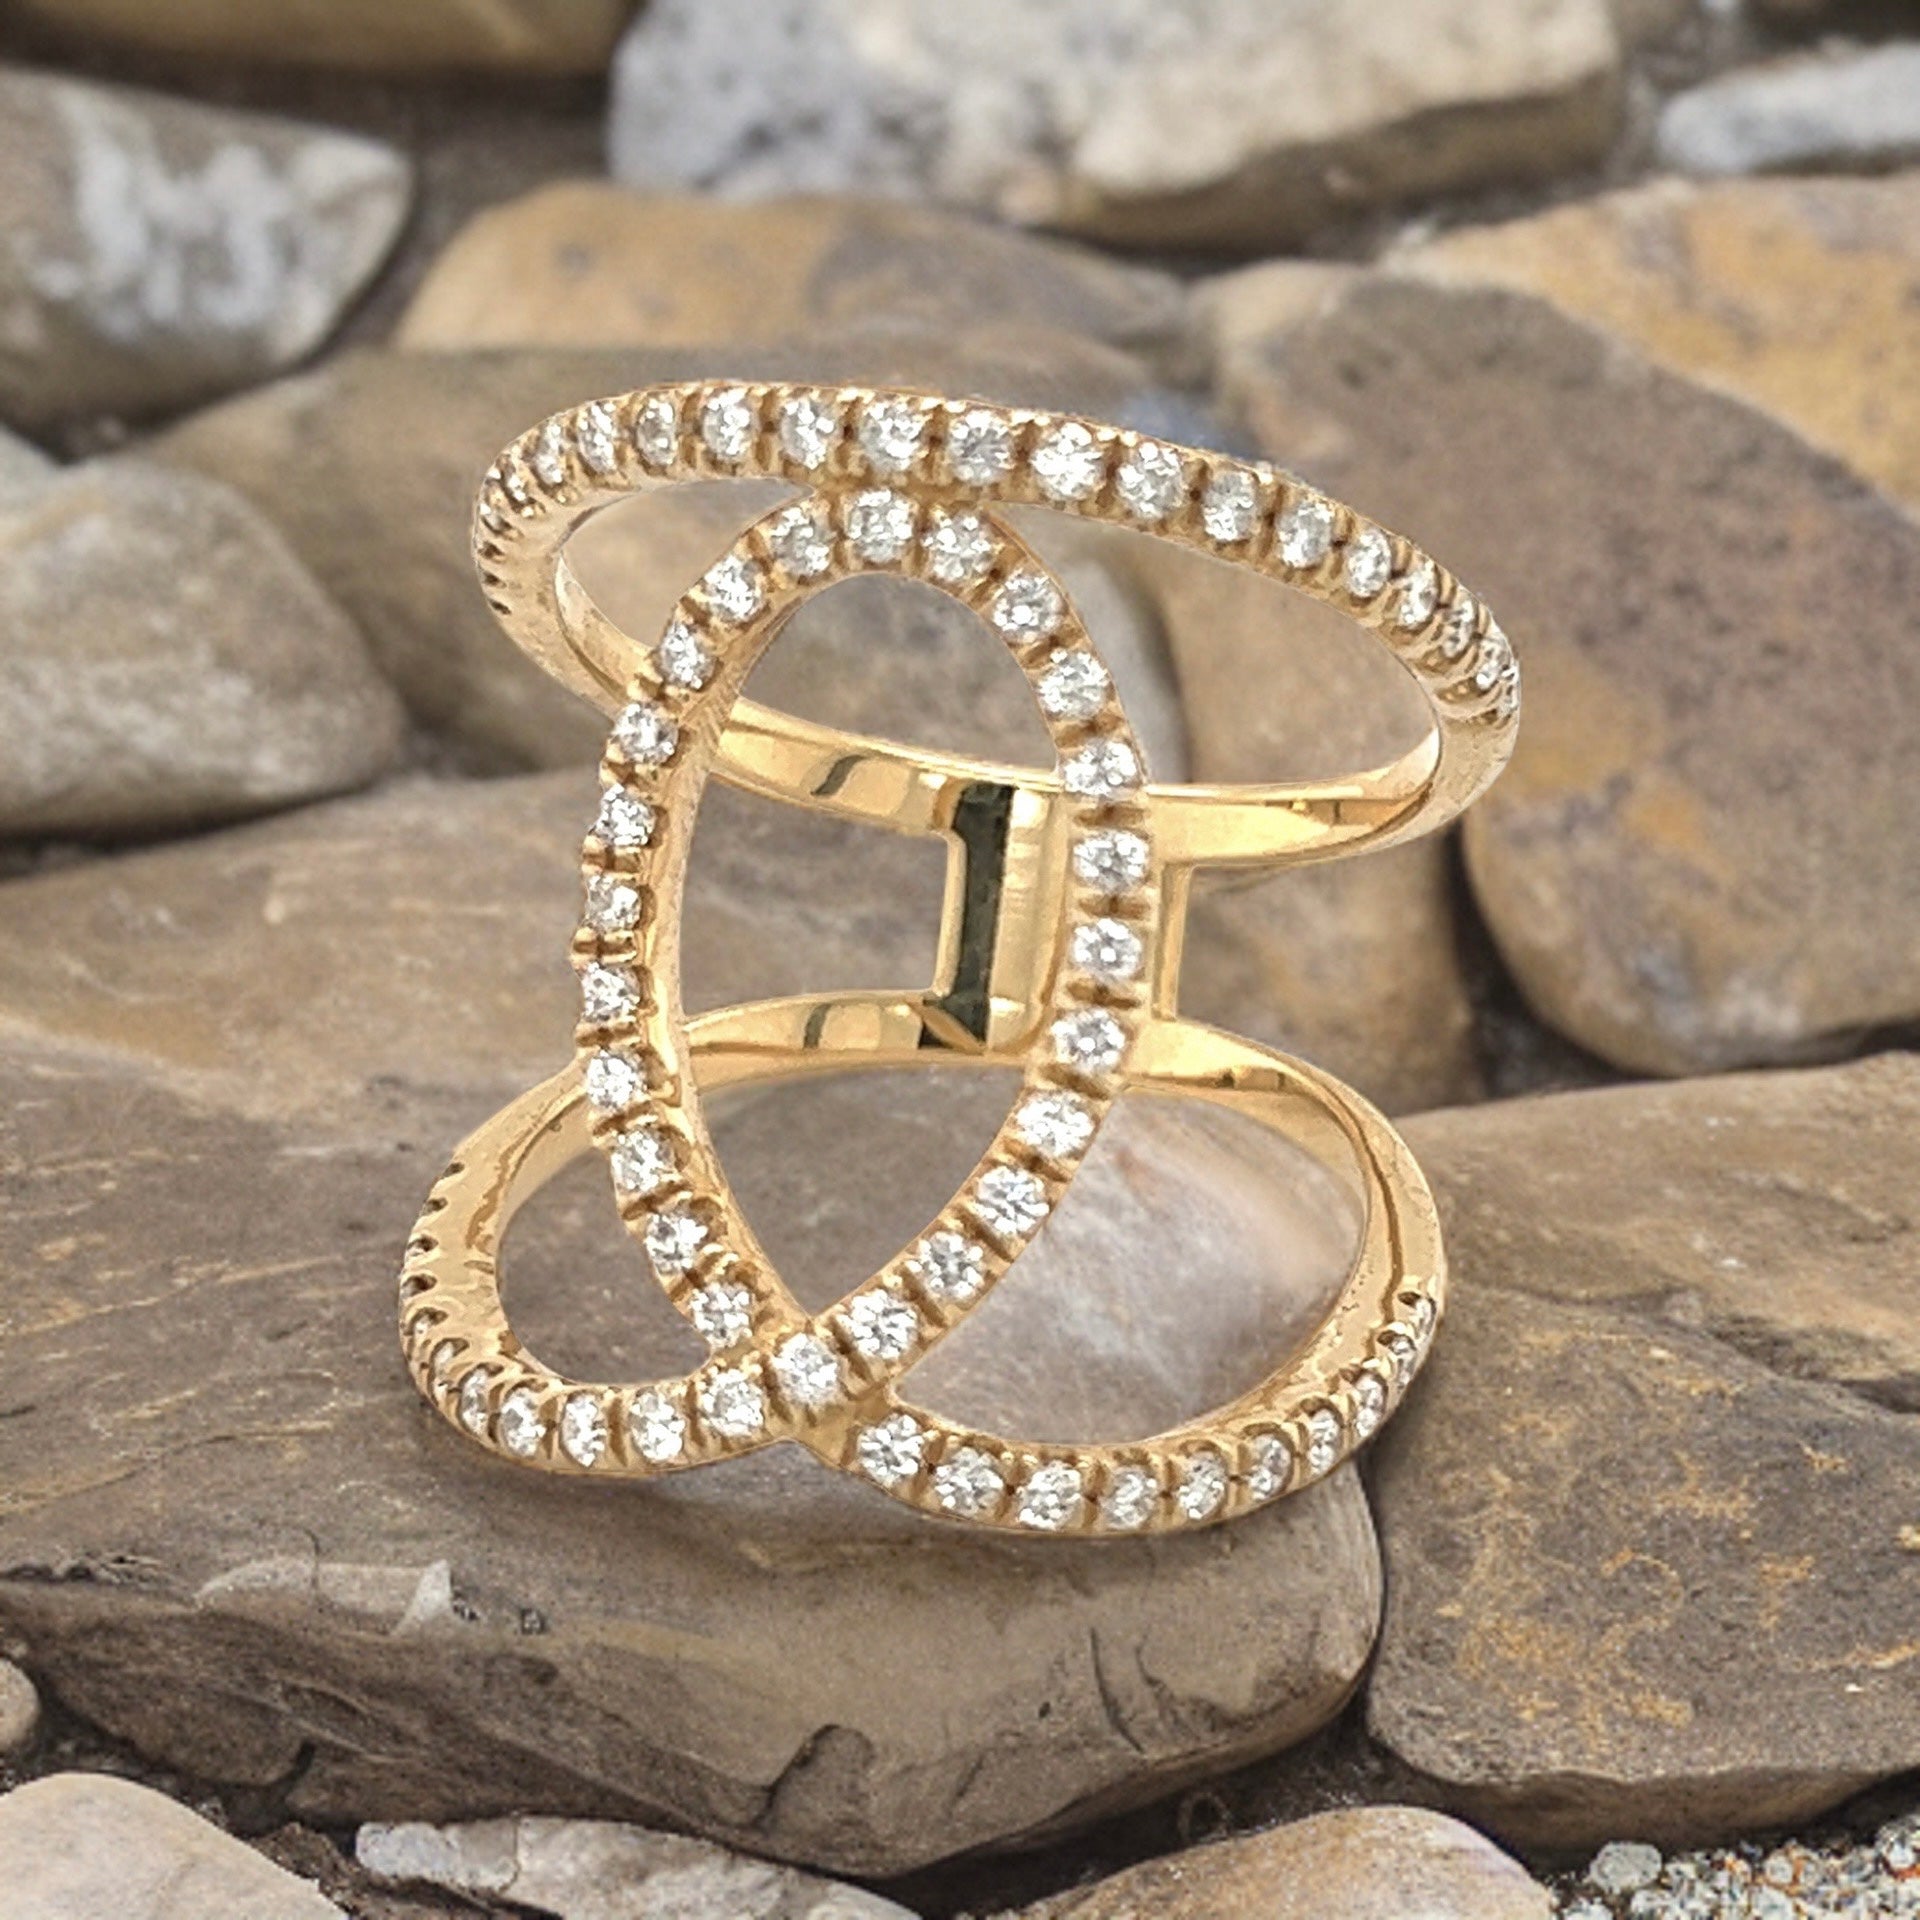 Diamond Ring Size 9.25 14k Gold 0.85 TCW 7.02 Grams Certified $5,950 215418 - Certified Fine Jewelry